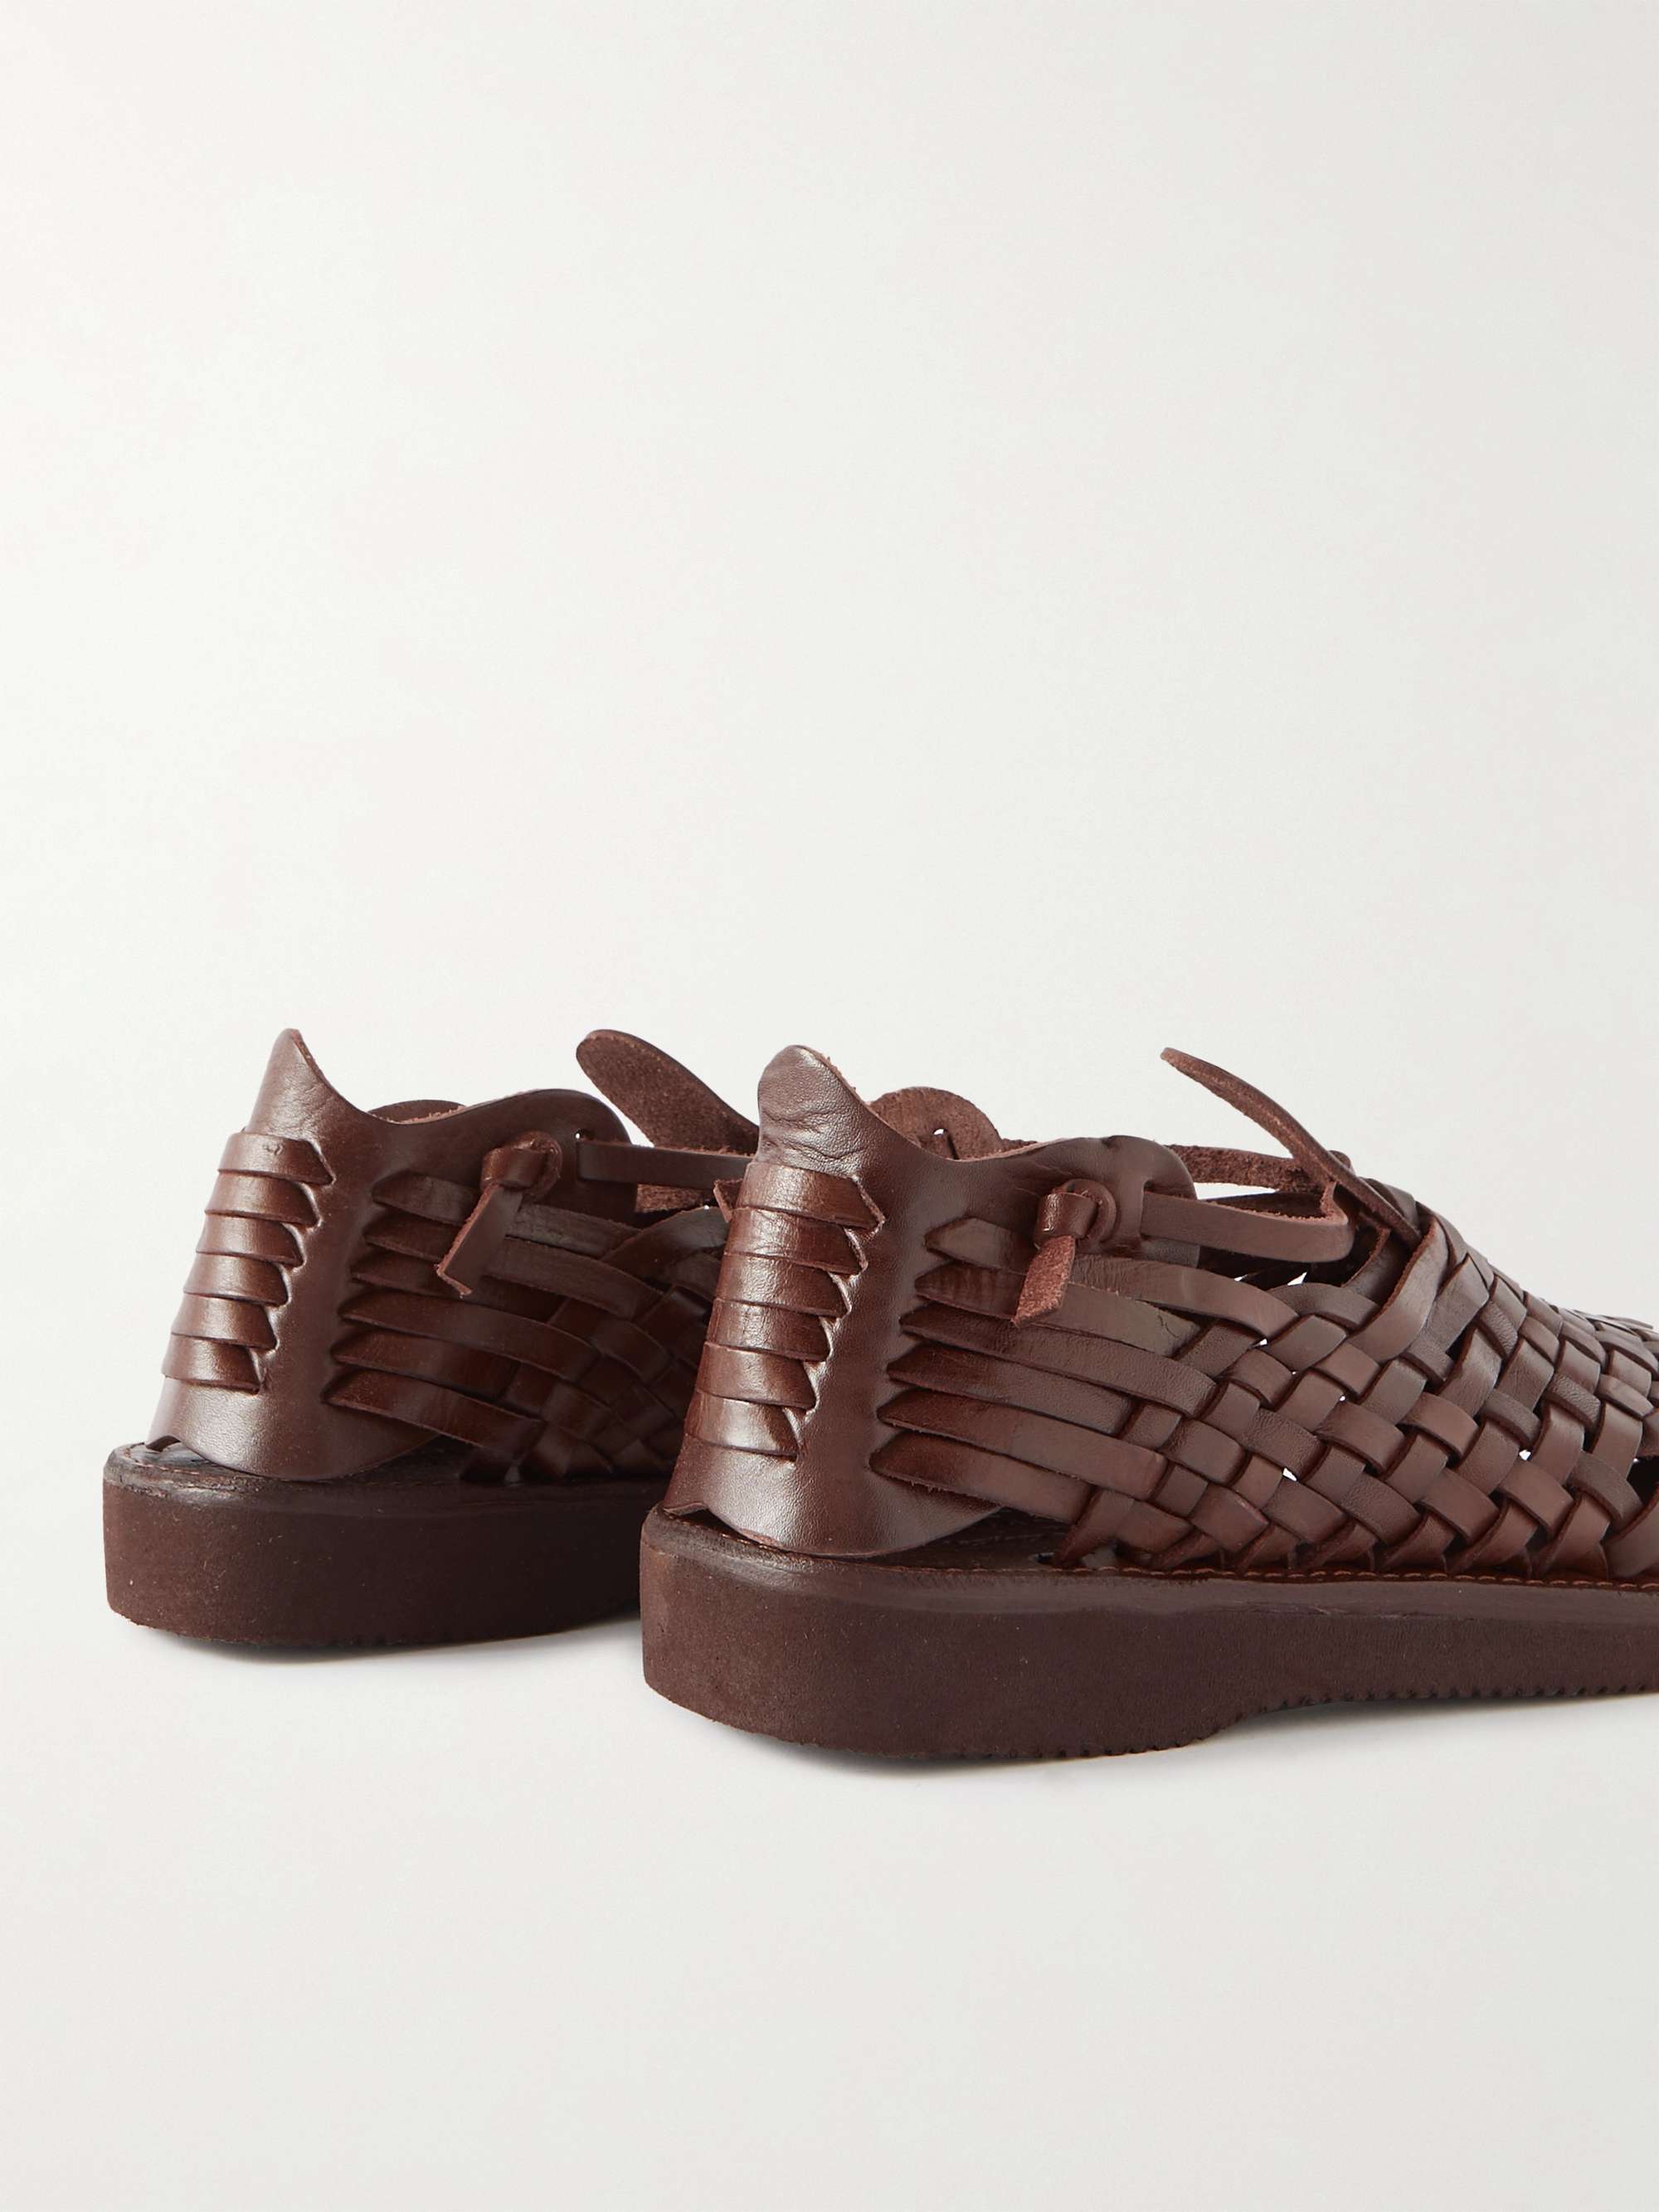 YUKETEN Cruz Woven Leather Sandals